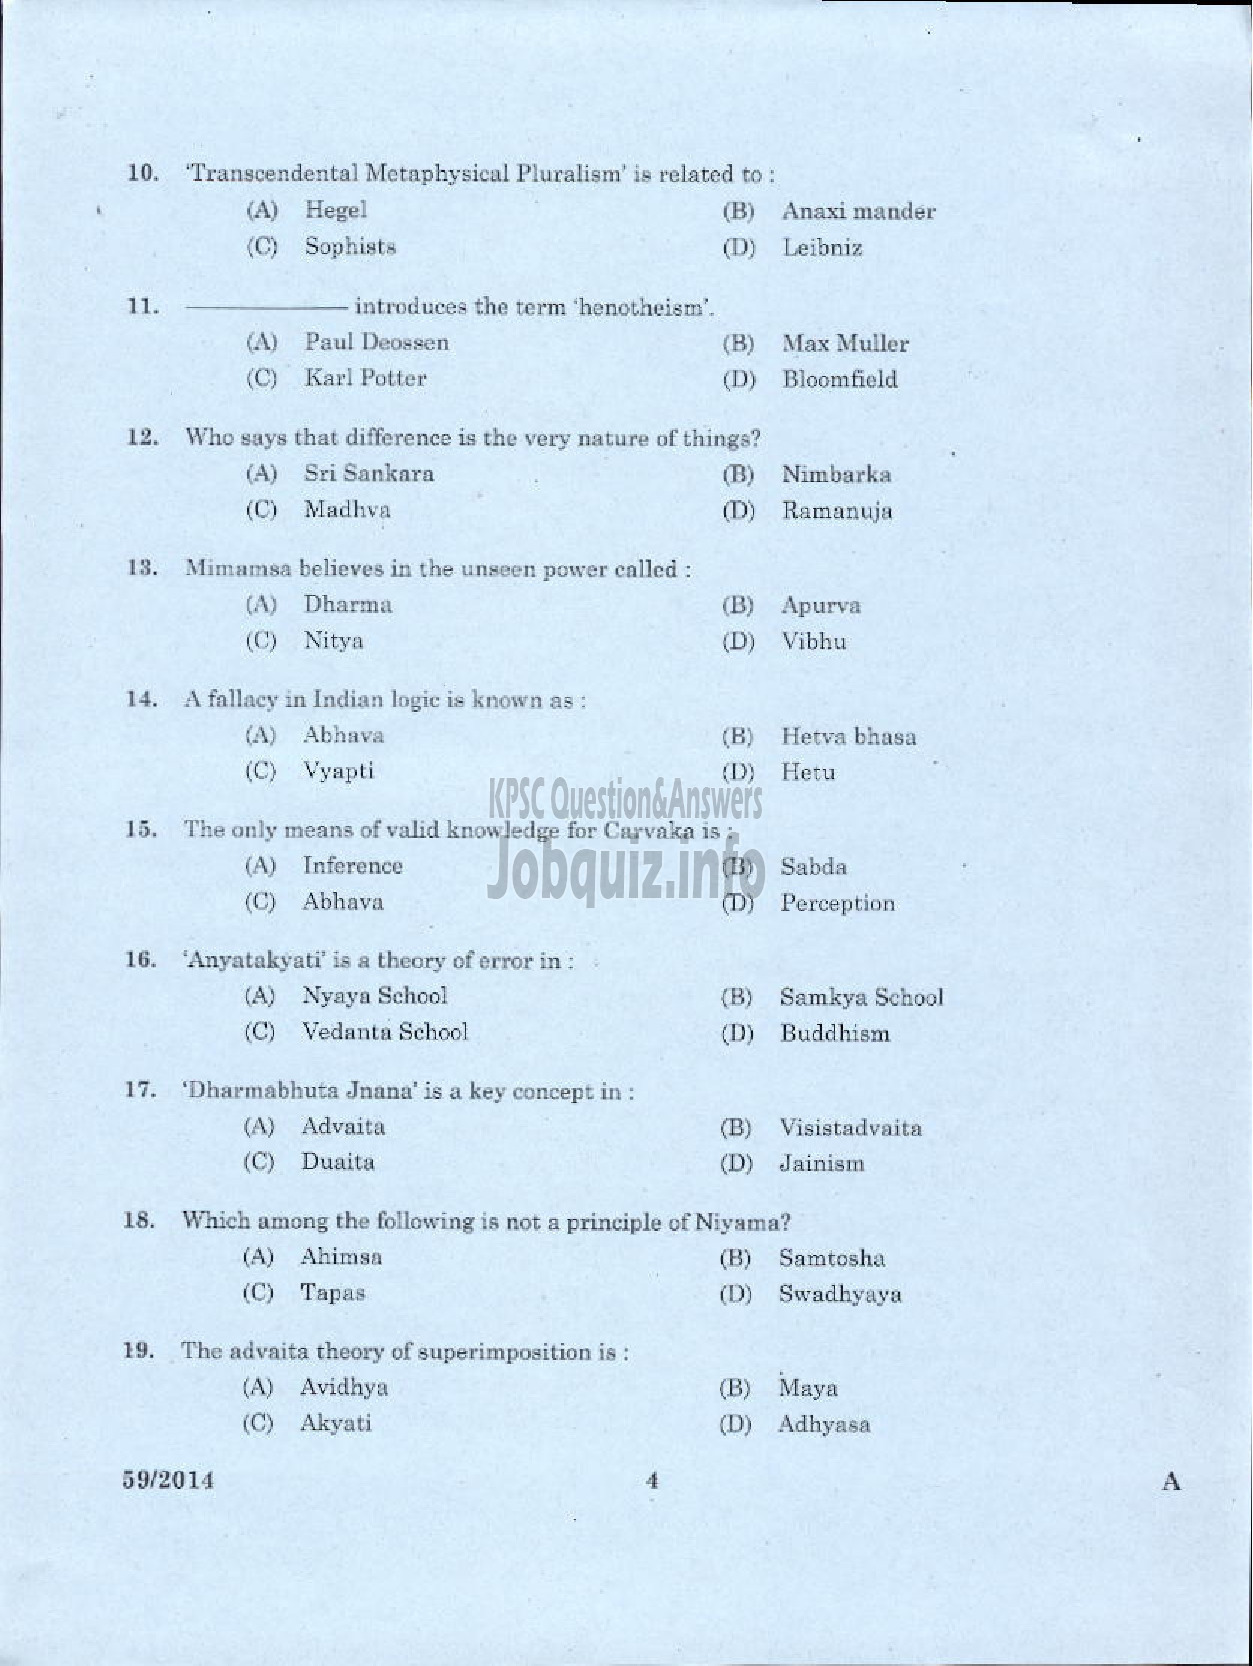 Kerala PSC Question Paper - LECTURER IN PHILOSOPHY KERALA COLLEGIATE EDUCATION-2